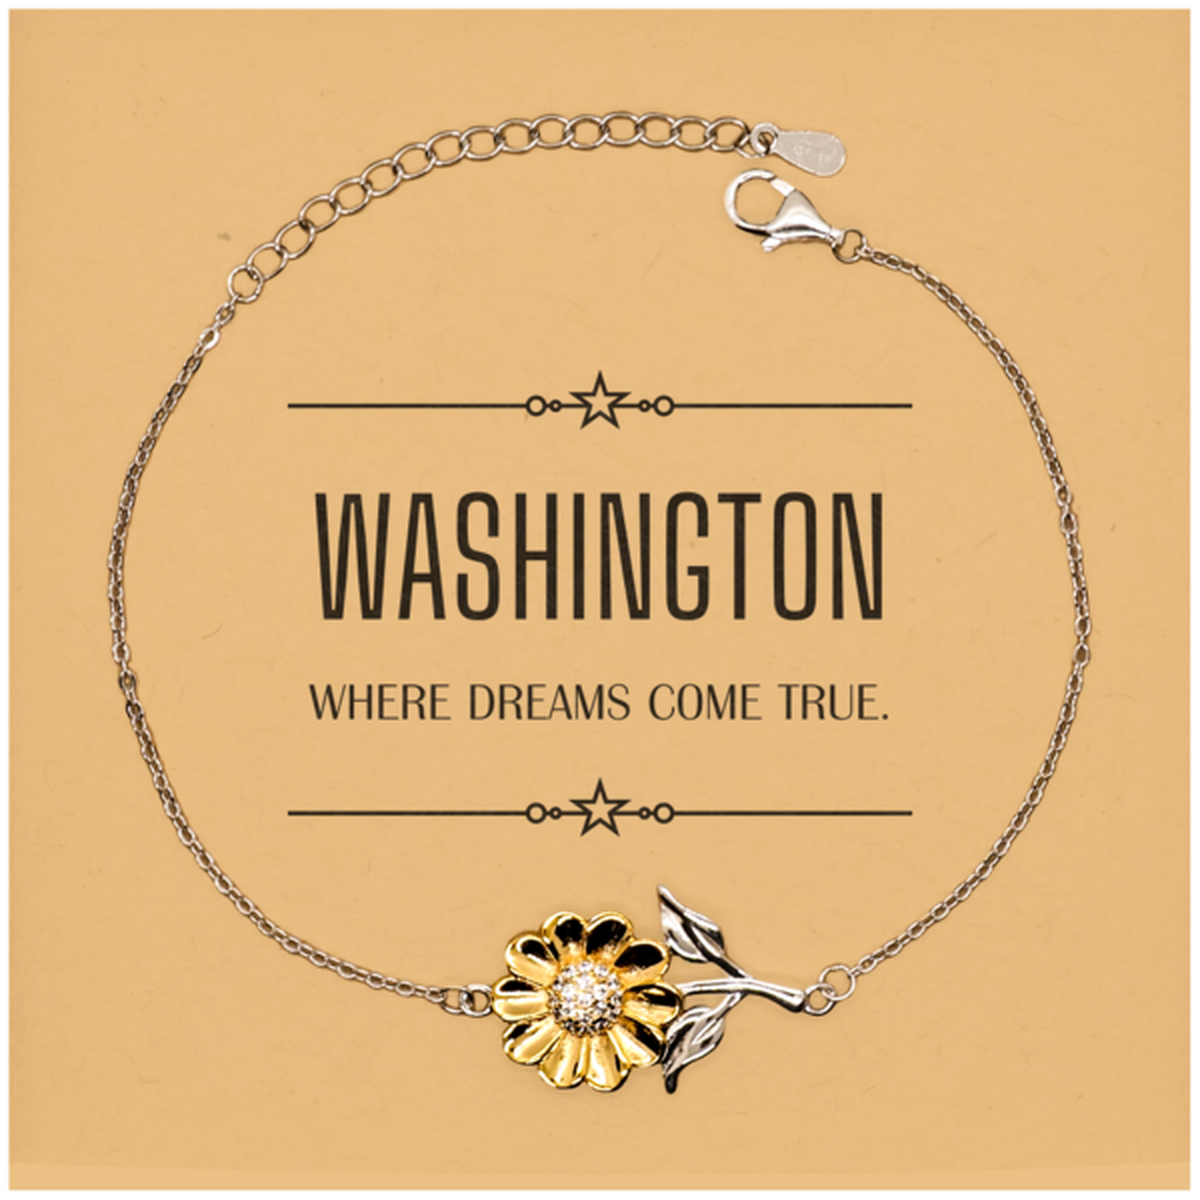 Love Washington State Sunflower Bracelet, Washington Where dreams come true, Birthday Christmas Inspirational Gifts For Washington Men, Women, Friends